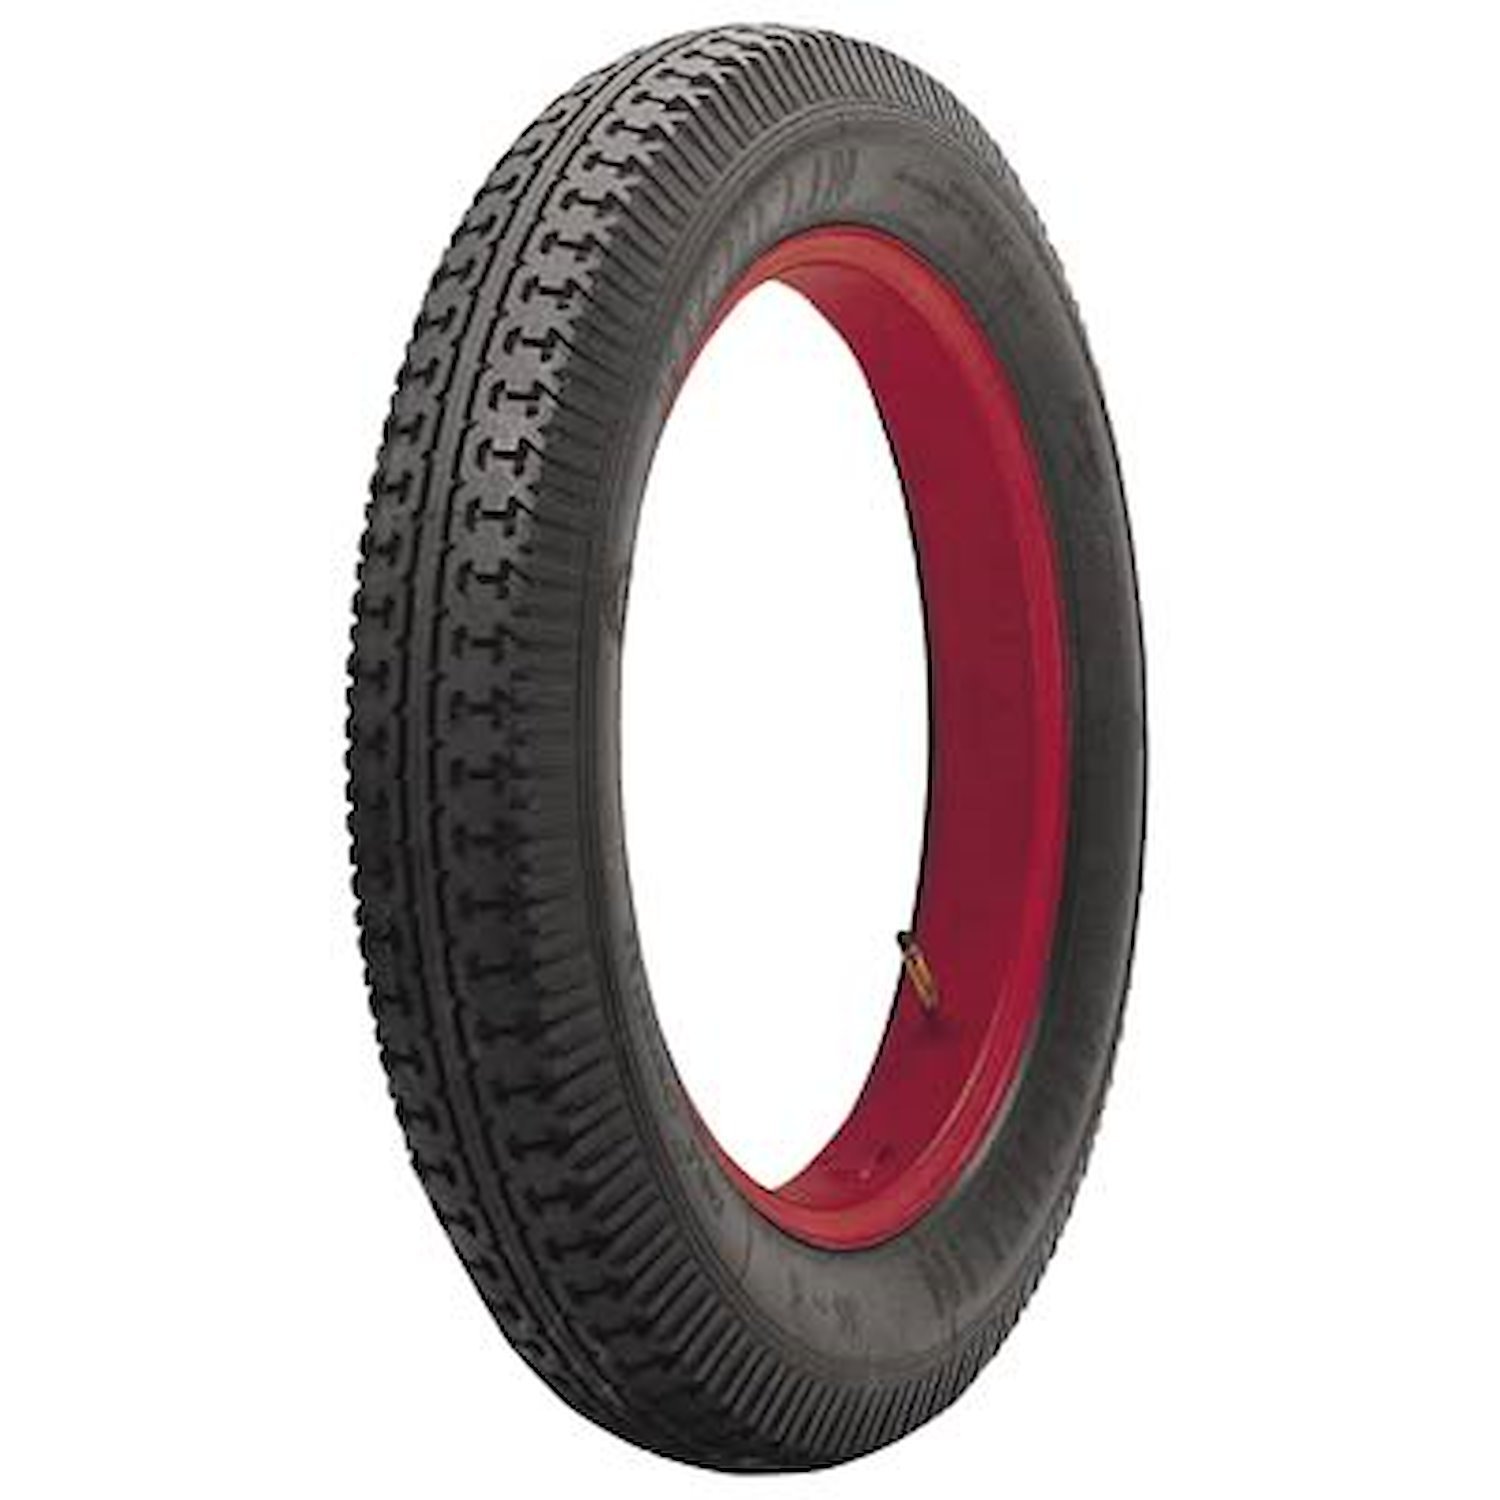 78964 Tire, Michelin Double Rivet, 550/600-21